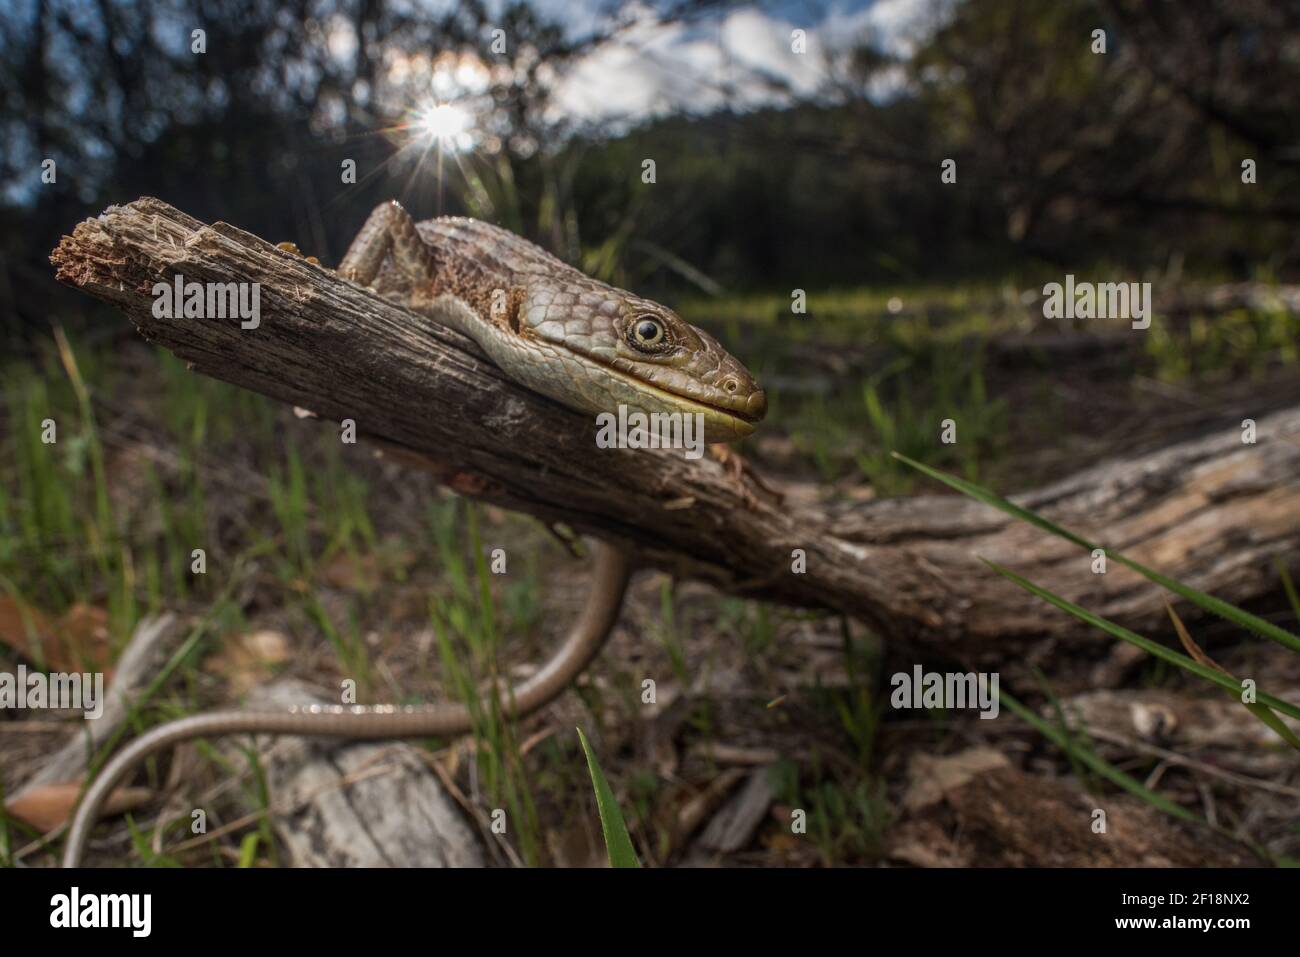 A southern alligator lizard (elgaria multicarinata) from Mt. Madonna county park in Santa Clara county in California. Stock Photo